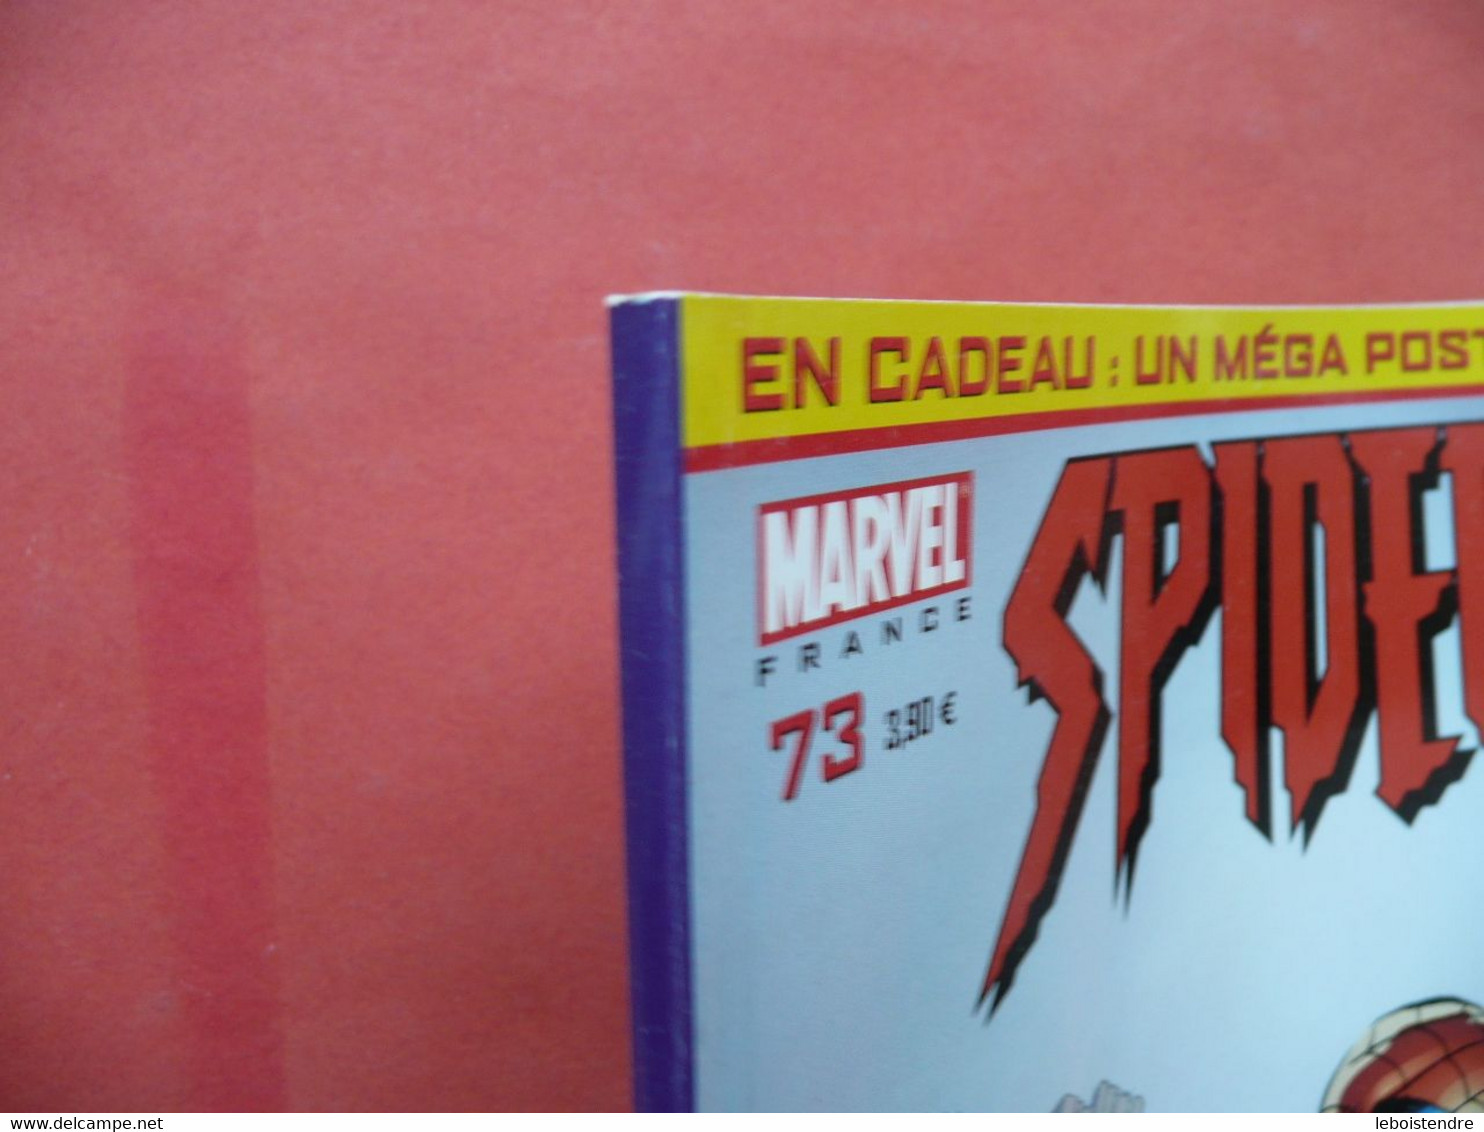 Spiderman - SPIDERMAN V2 SPIDER-MAN N 73 FEVRIER 2006 COLLECTOR EDITION  PANINI COMICS MARVEL